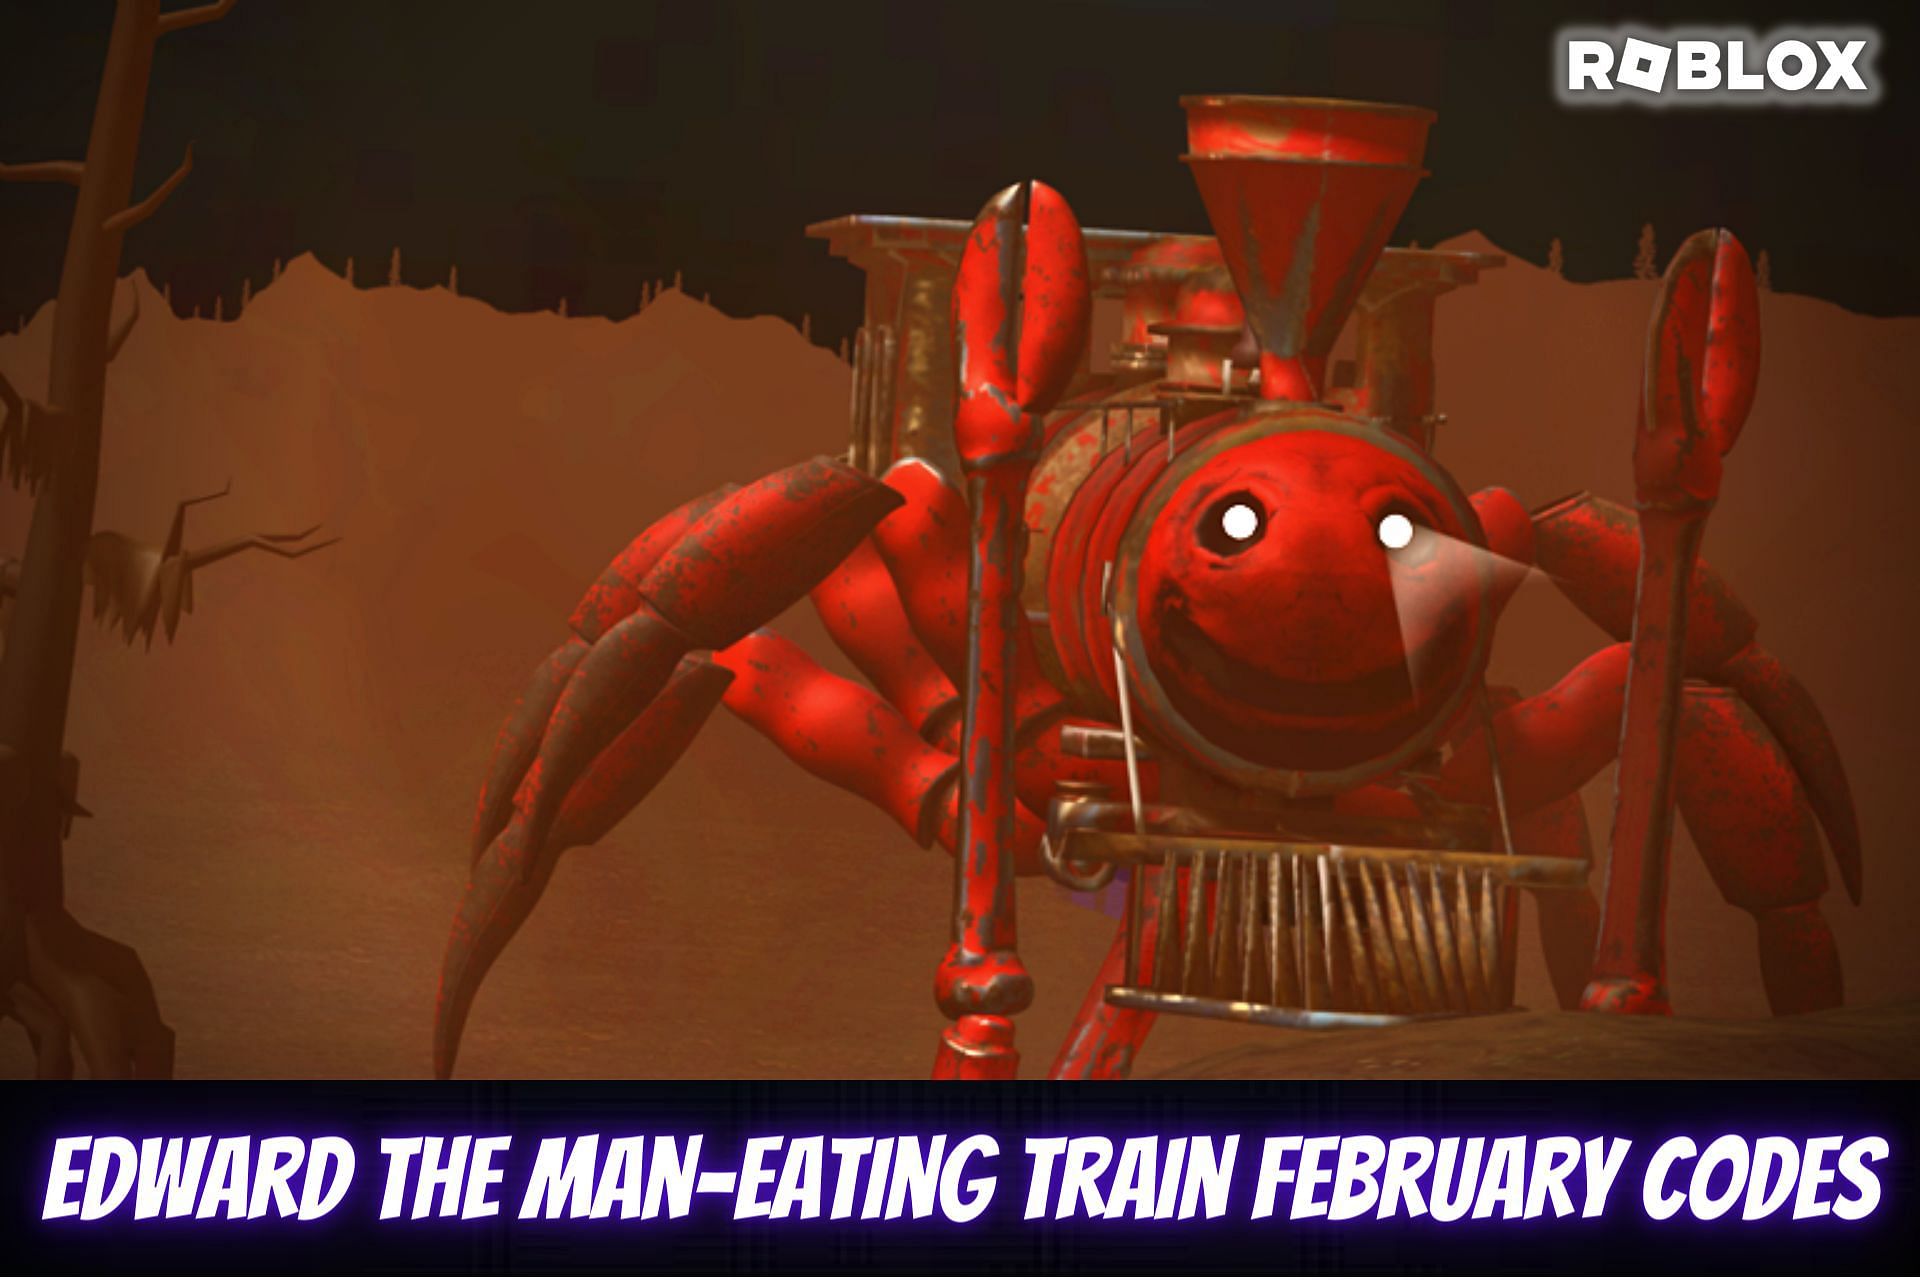 Edward the Man-Eating Train codes